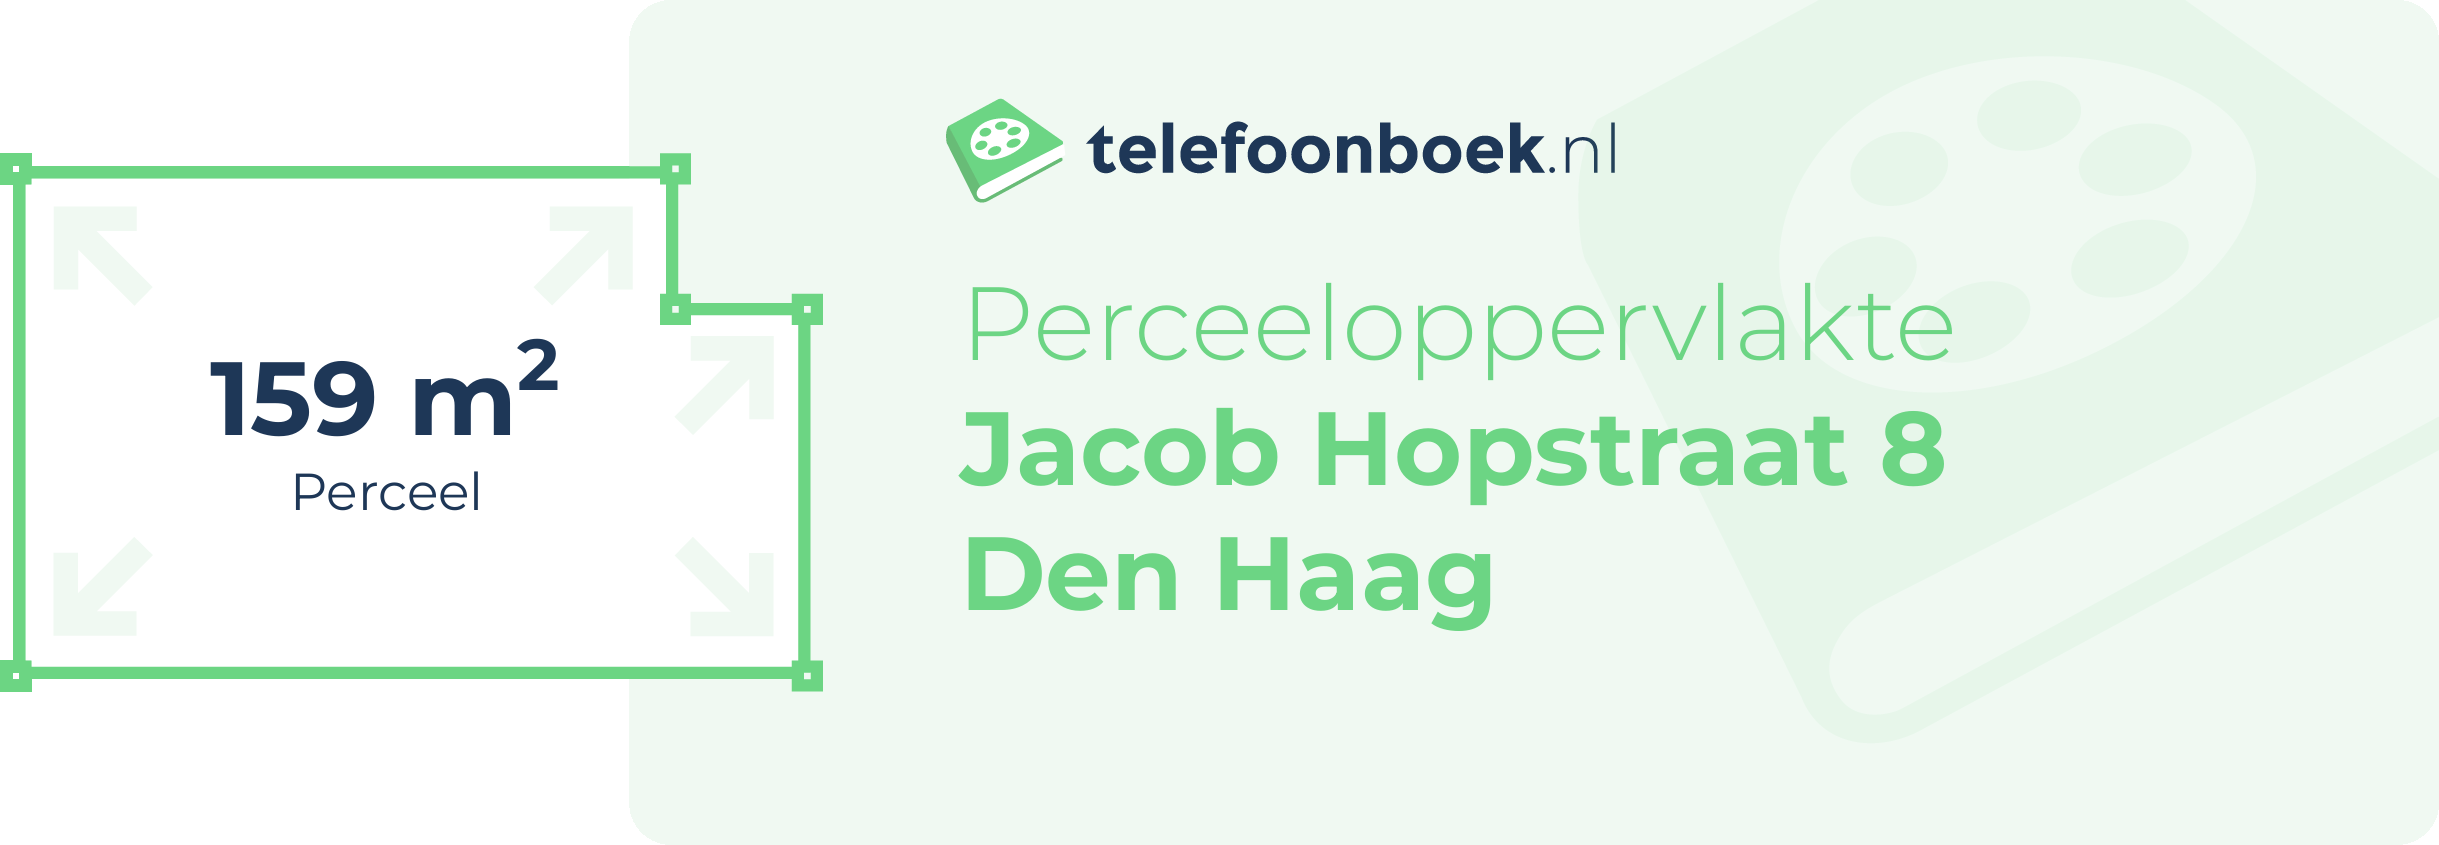 Perceeloppervlakte Jacob Hopstraat 8 Den Haag